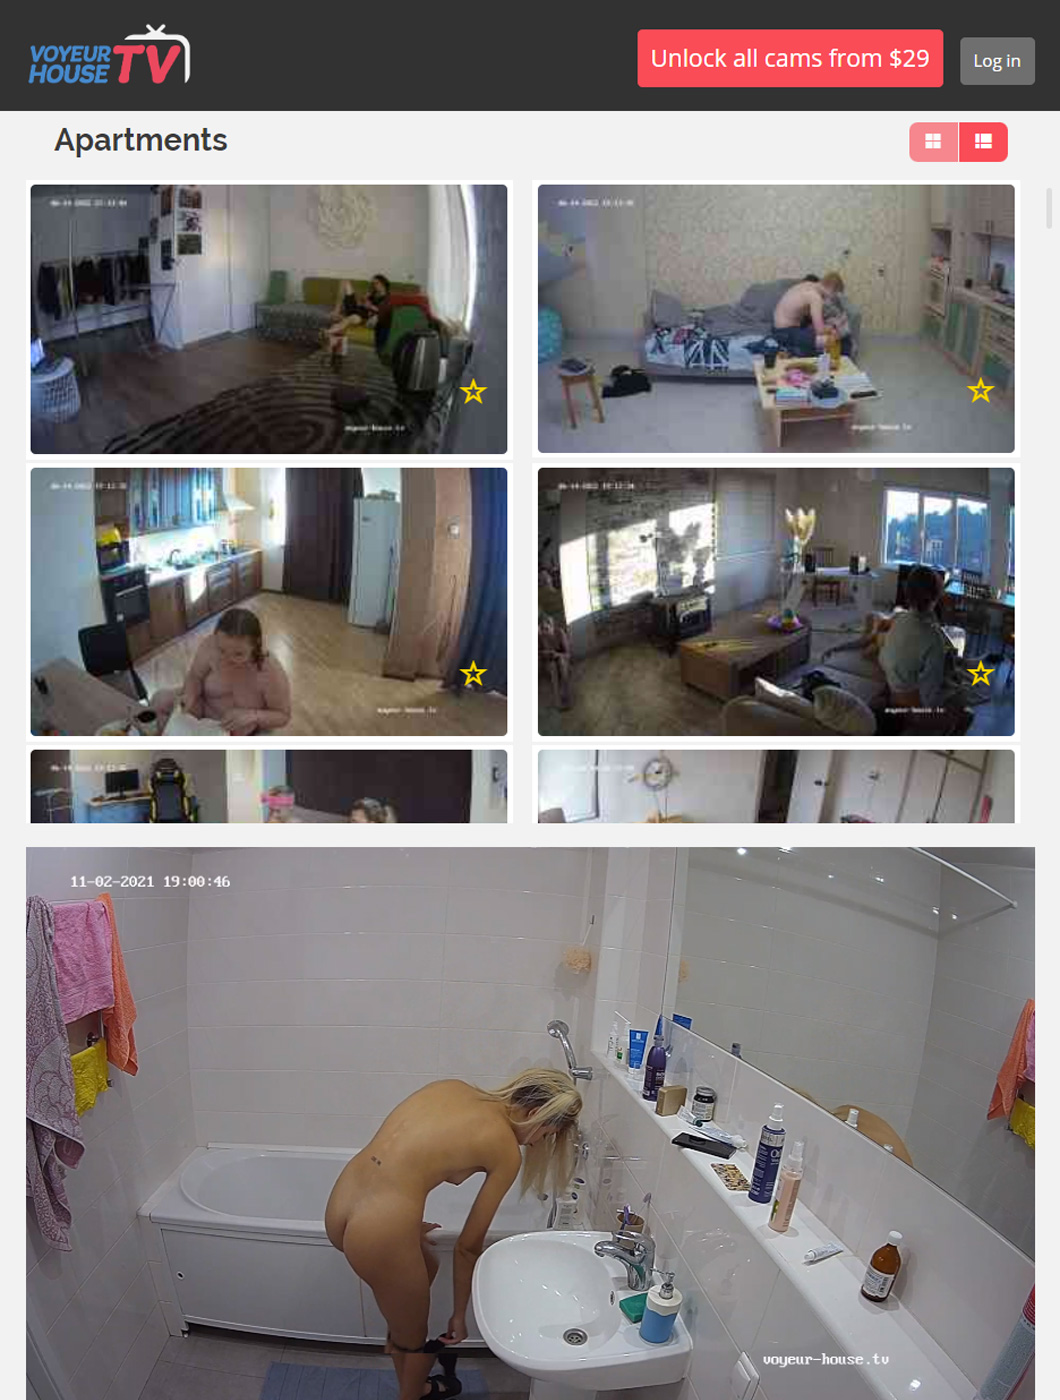 voyeur house live cams